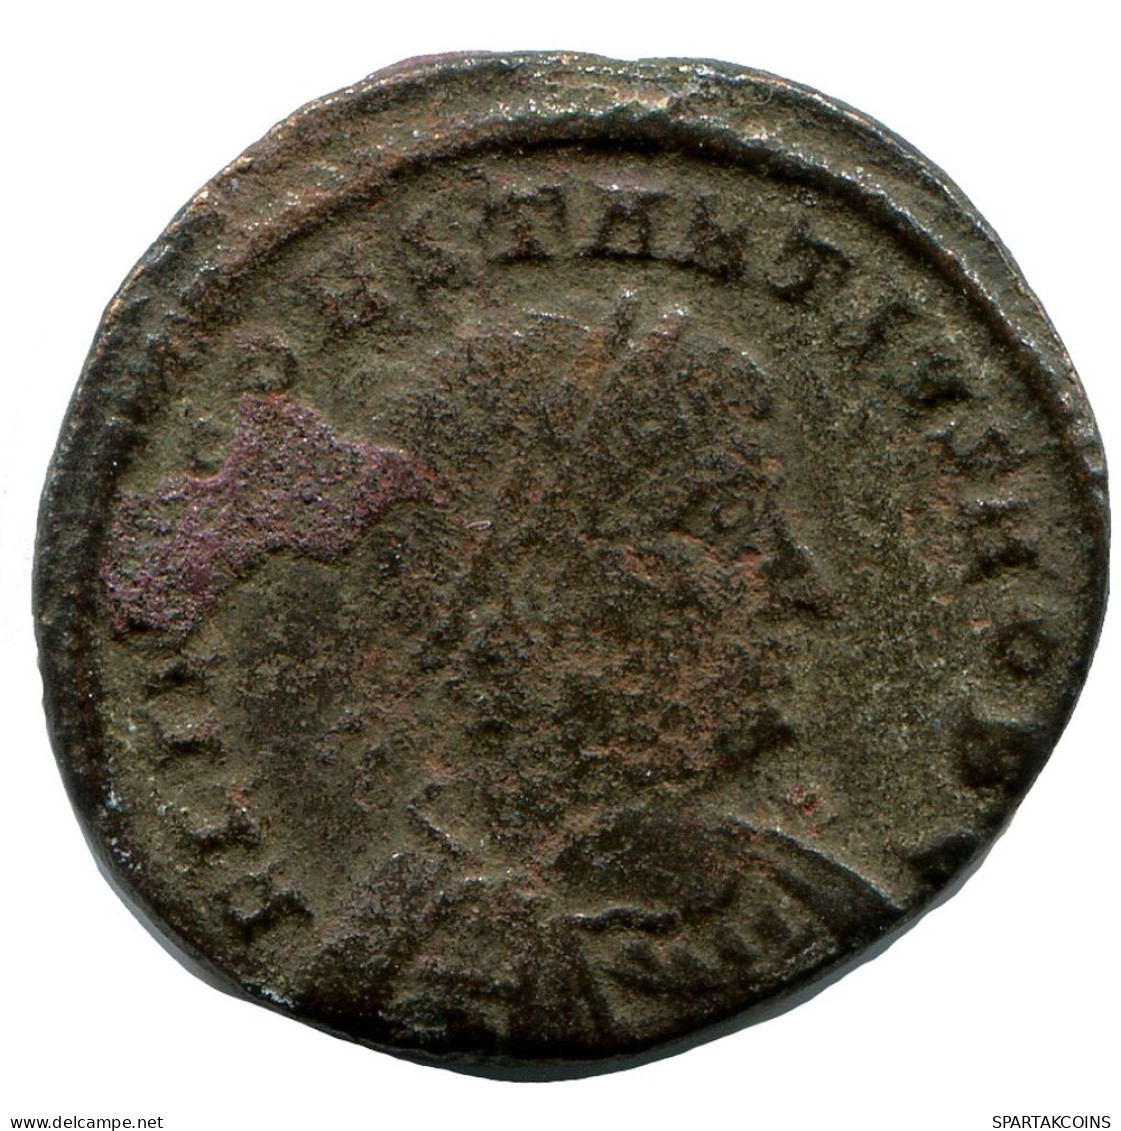 CONSTANTIUS II ALEKSANDRIA FROM THE ROYAL ONTARIO MUSEUM #ANC10478.14.U.A - El Imperio Christiano (307 / 363)